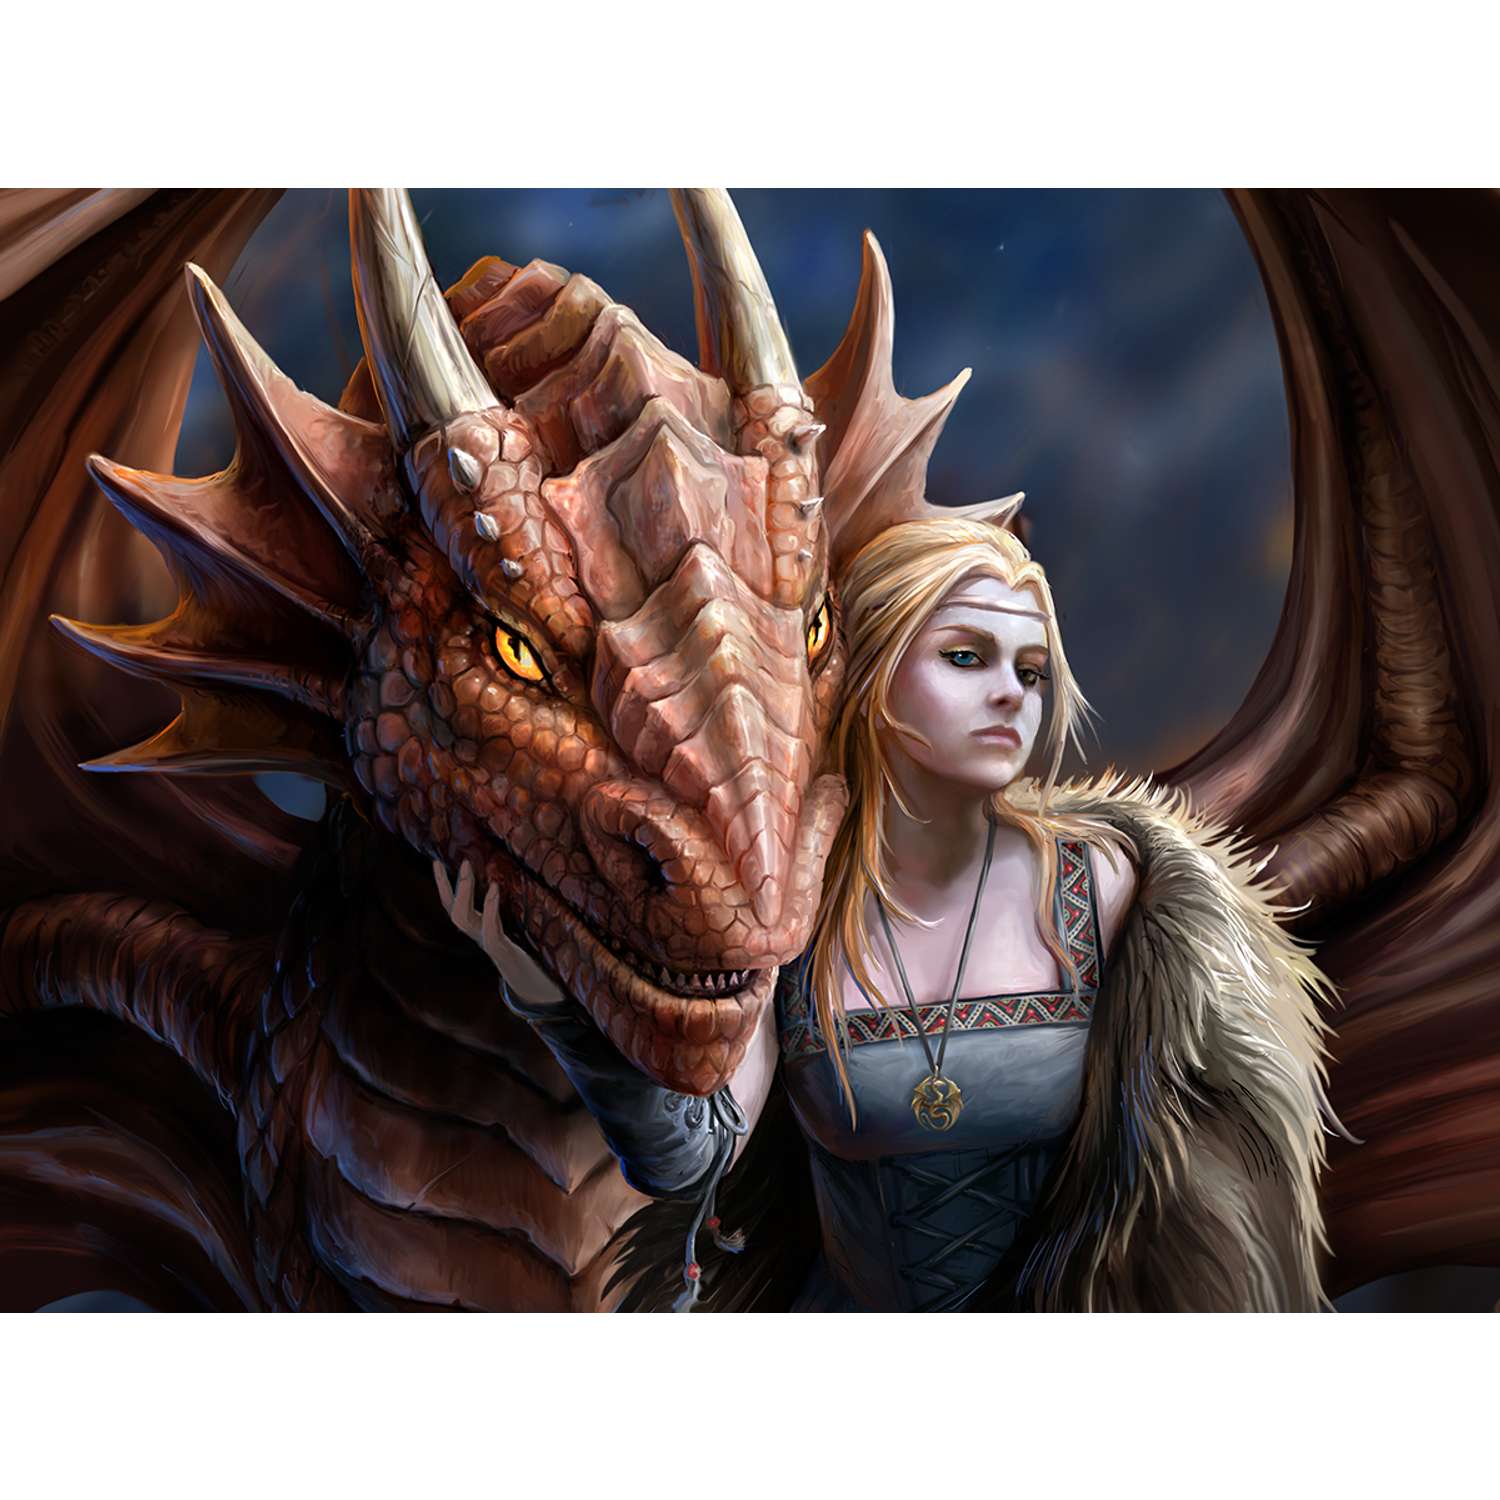 Драконы обожают принцесс. Anne Stokes драконы. Энн Стоукс драконы 19. Энн Стоукс картины.